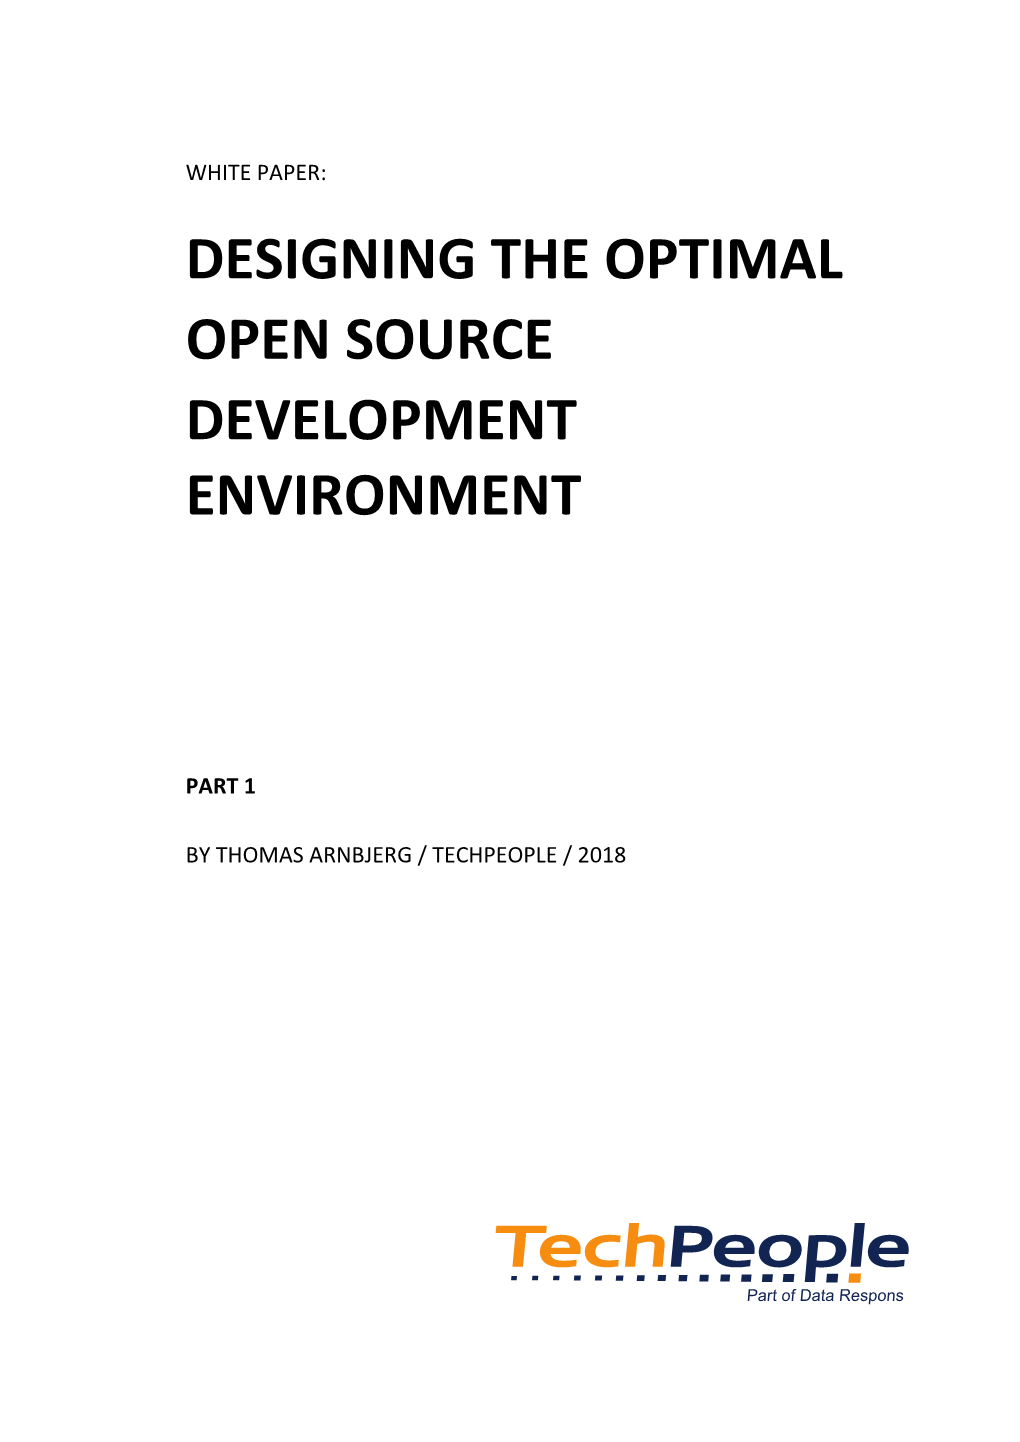 Designing the Optimal Open Source Development Environment